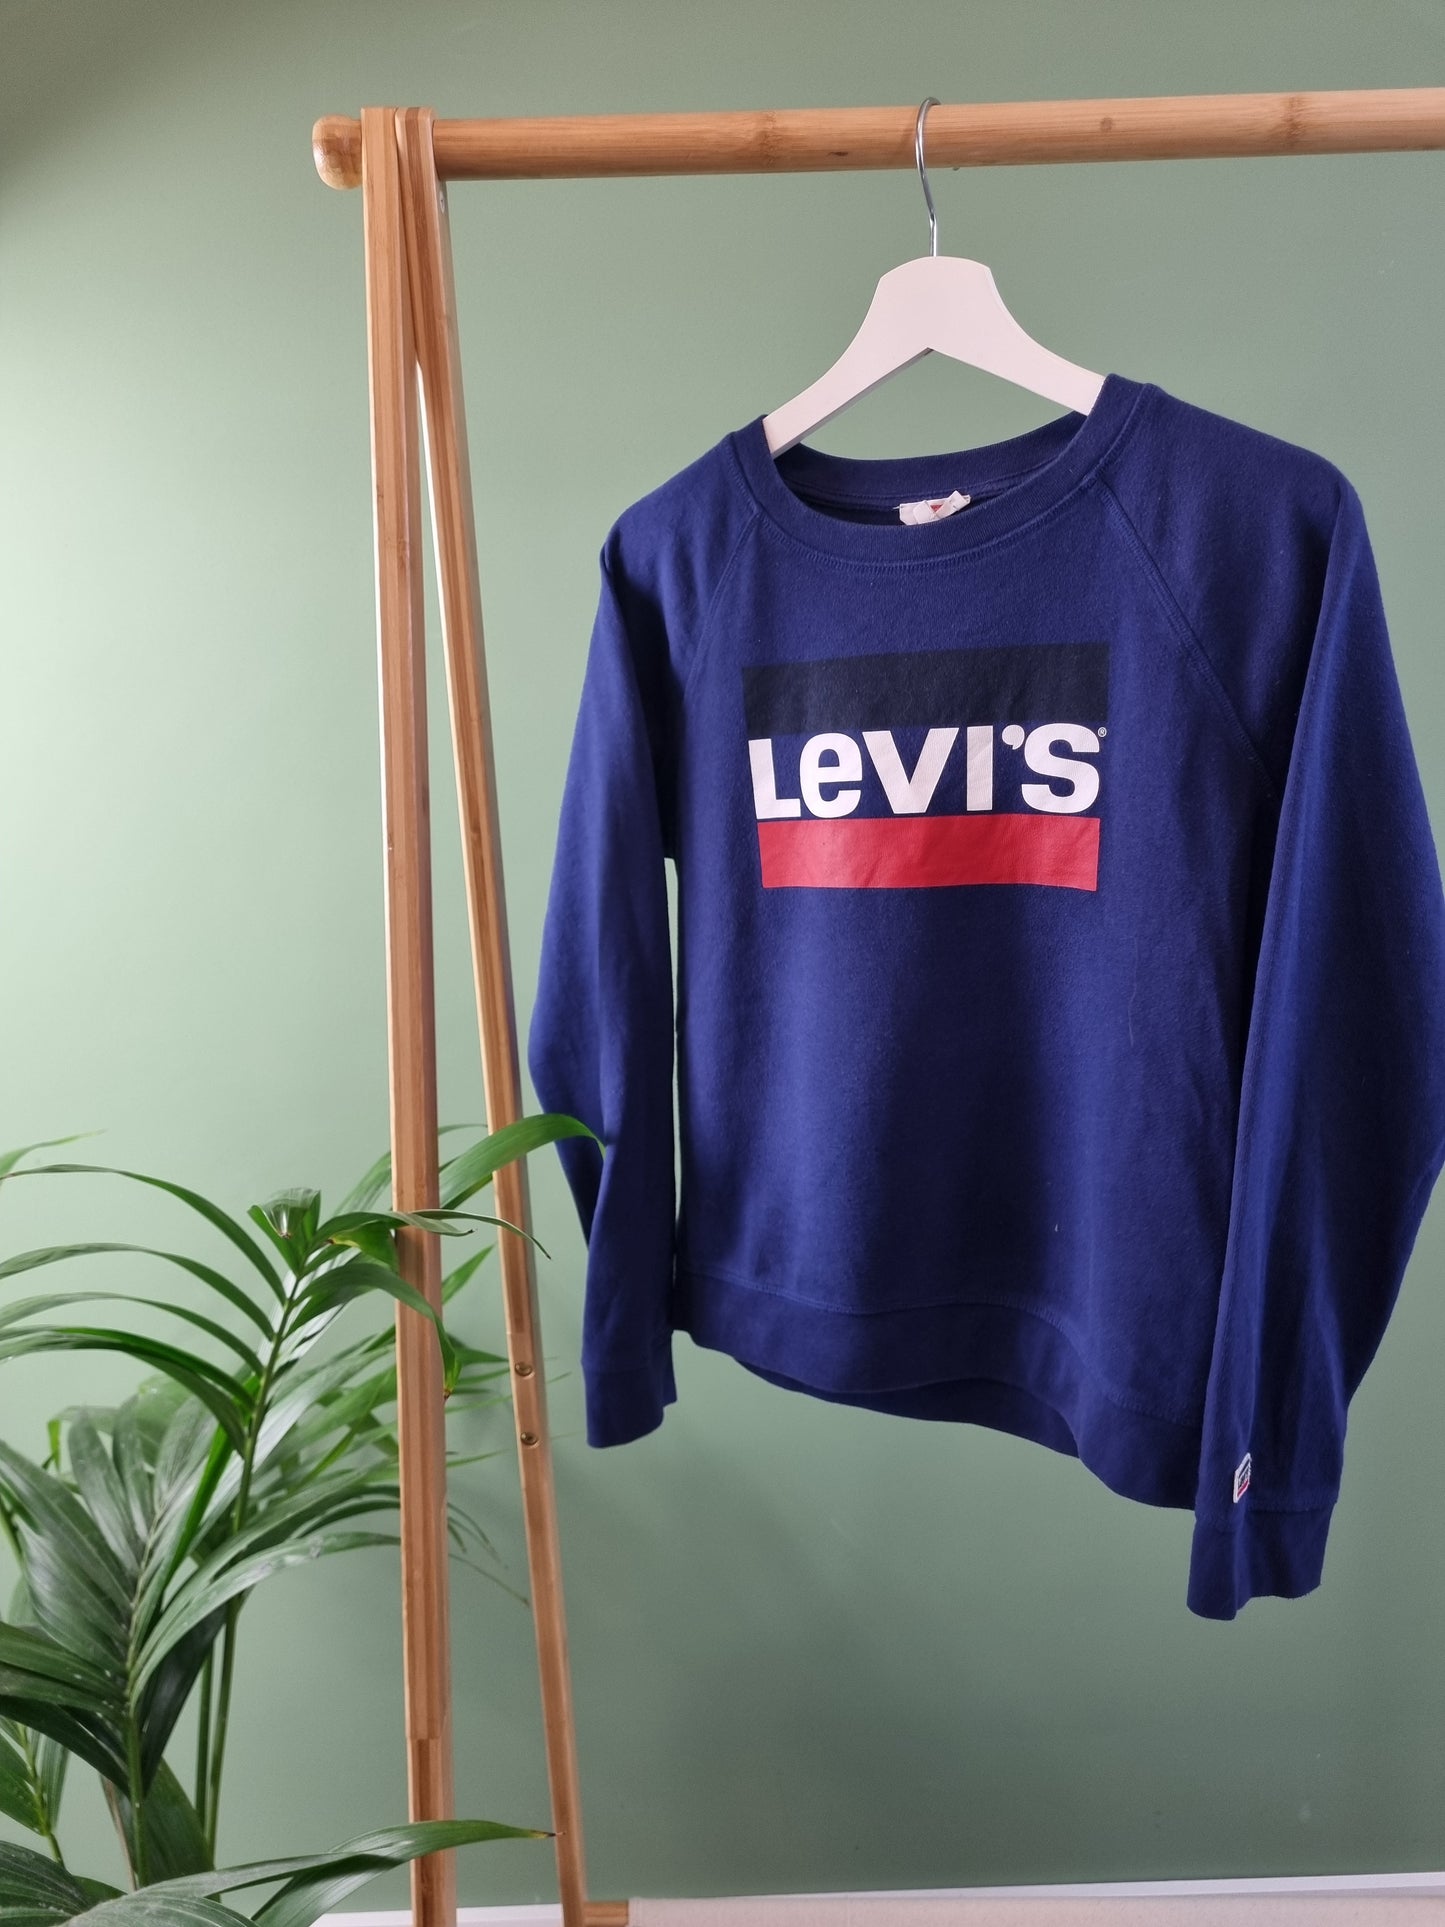 Levi's front logo sweater maat M